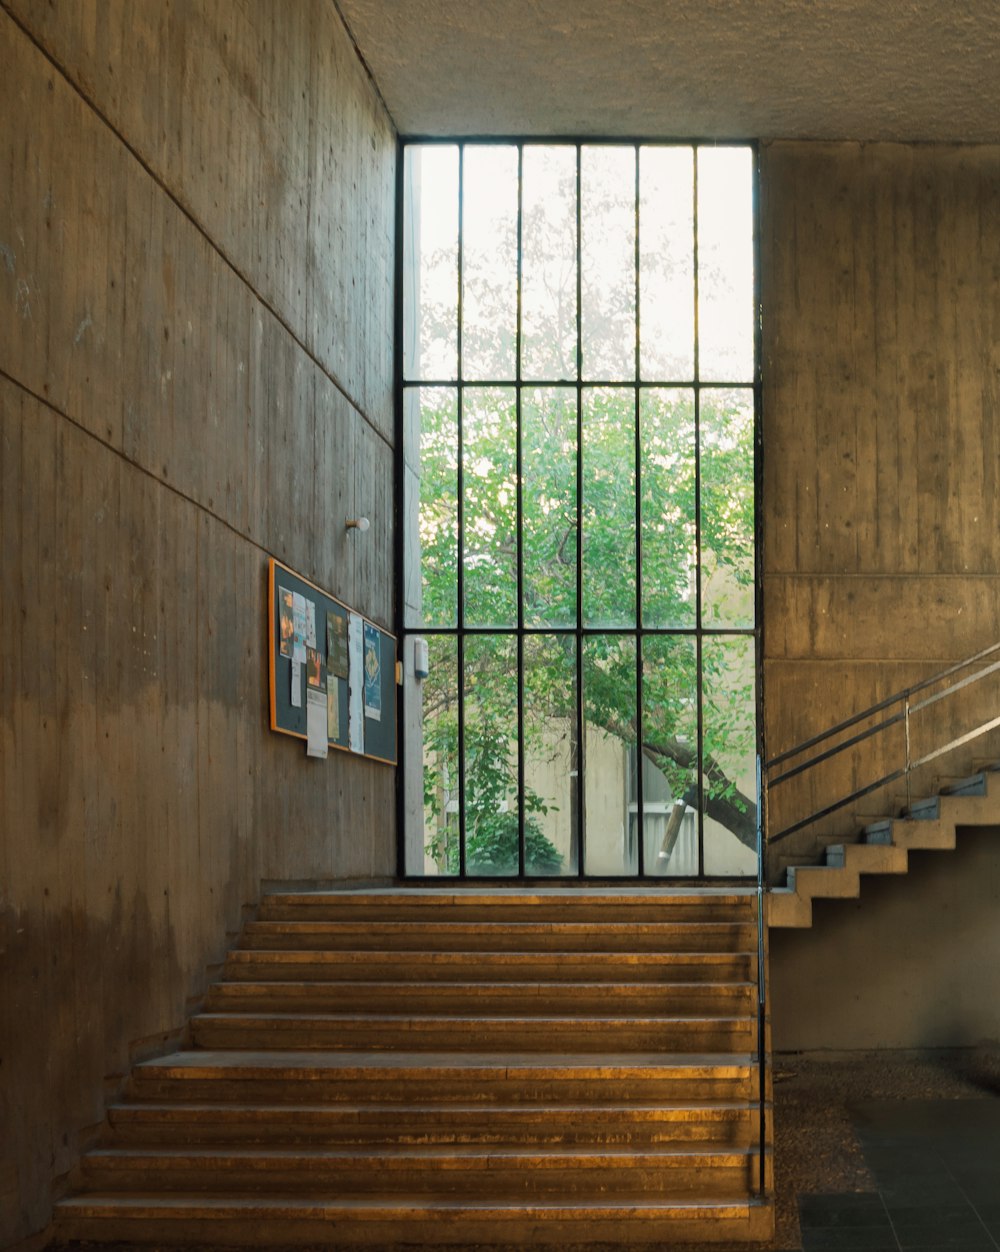 brown concrete staircase near green metal window grill